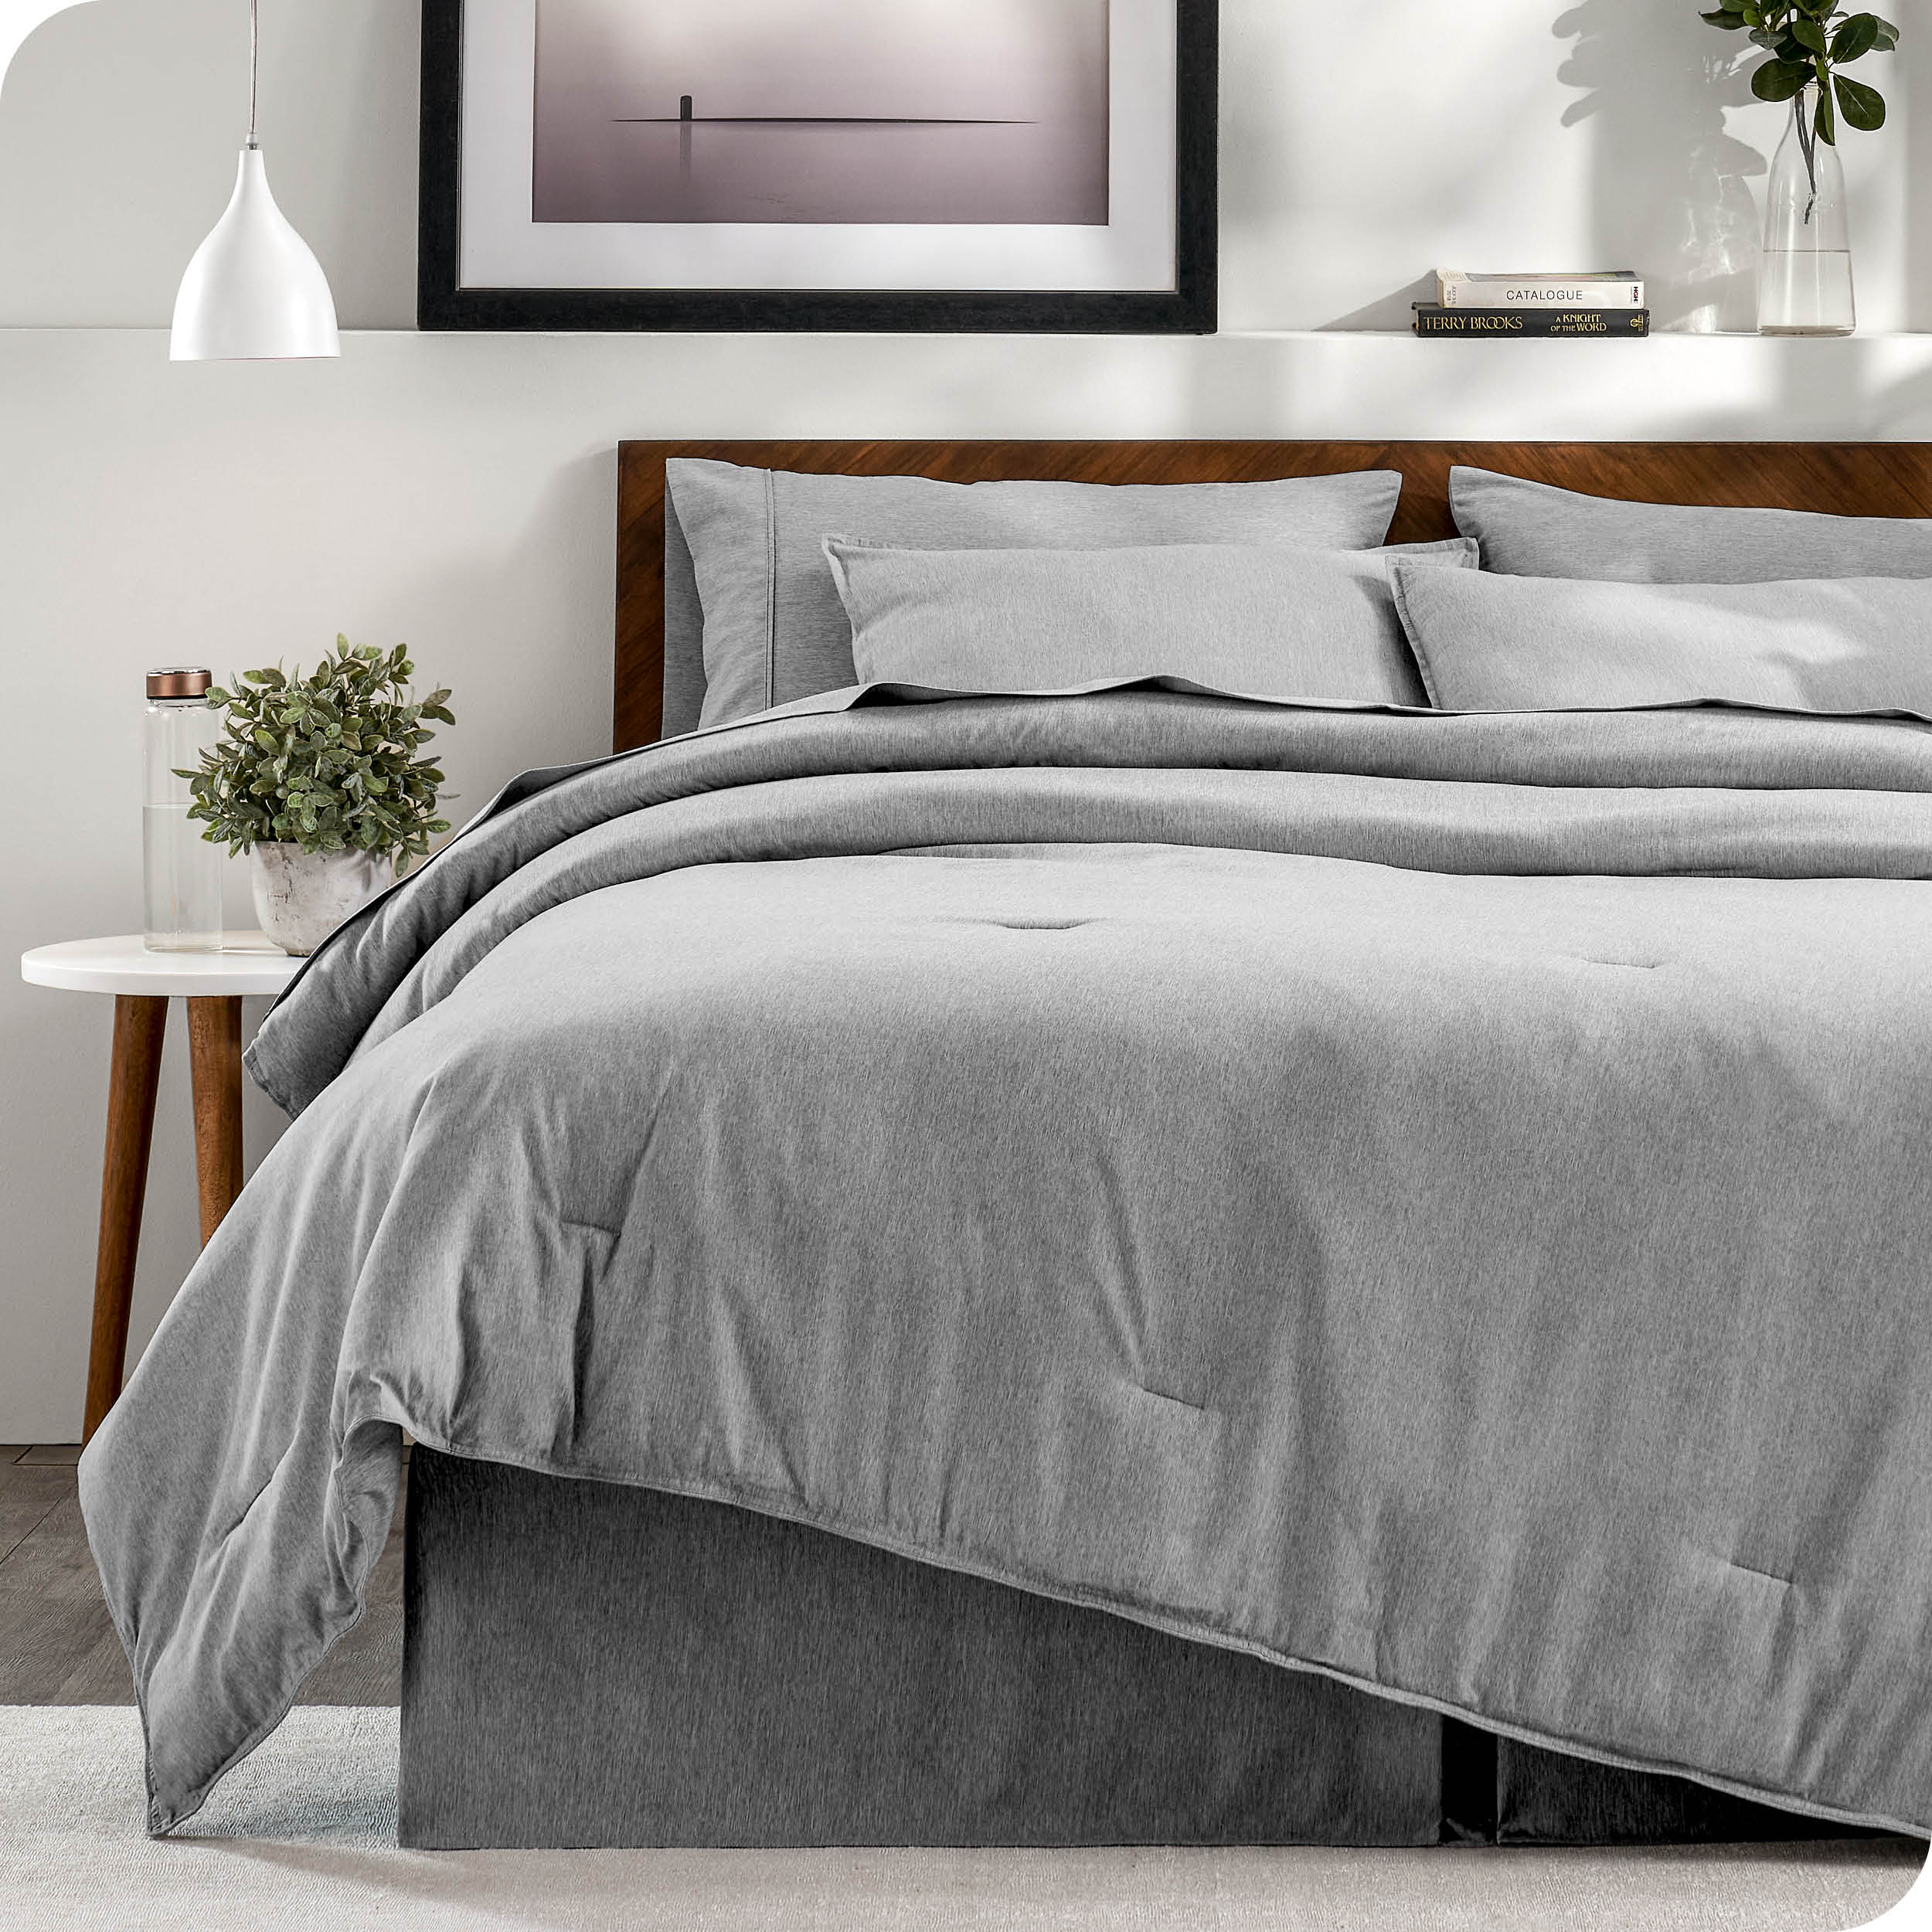 Bare Home Complete Bedding Set 8 Piece Comforter & Sheet Set & Bed Skirt - Goose Down Alternative - Ultra-Soft 1800 Premium